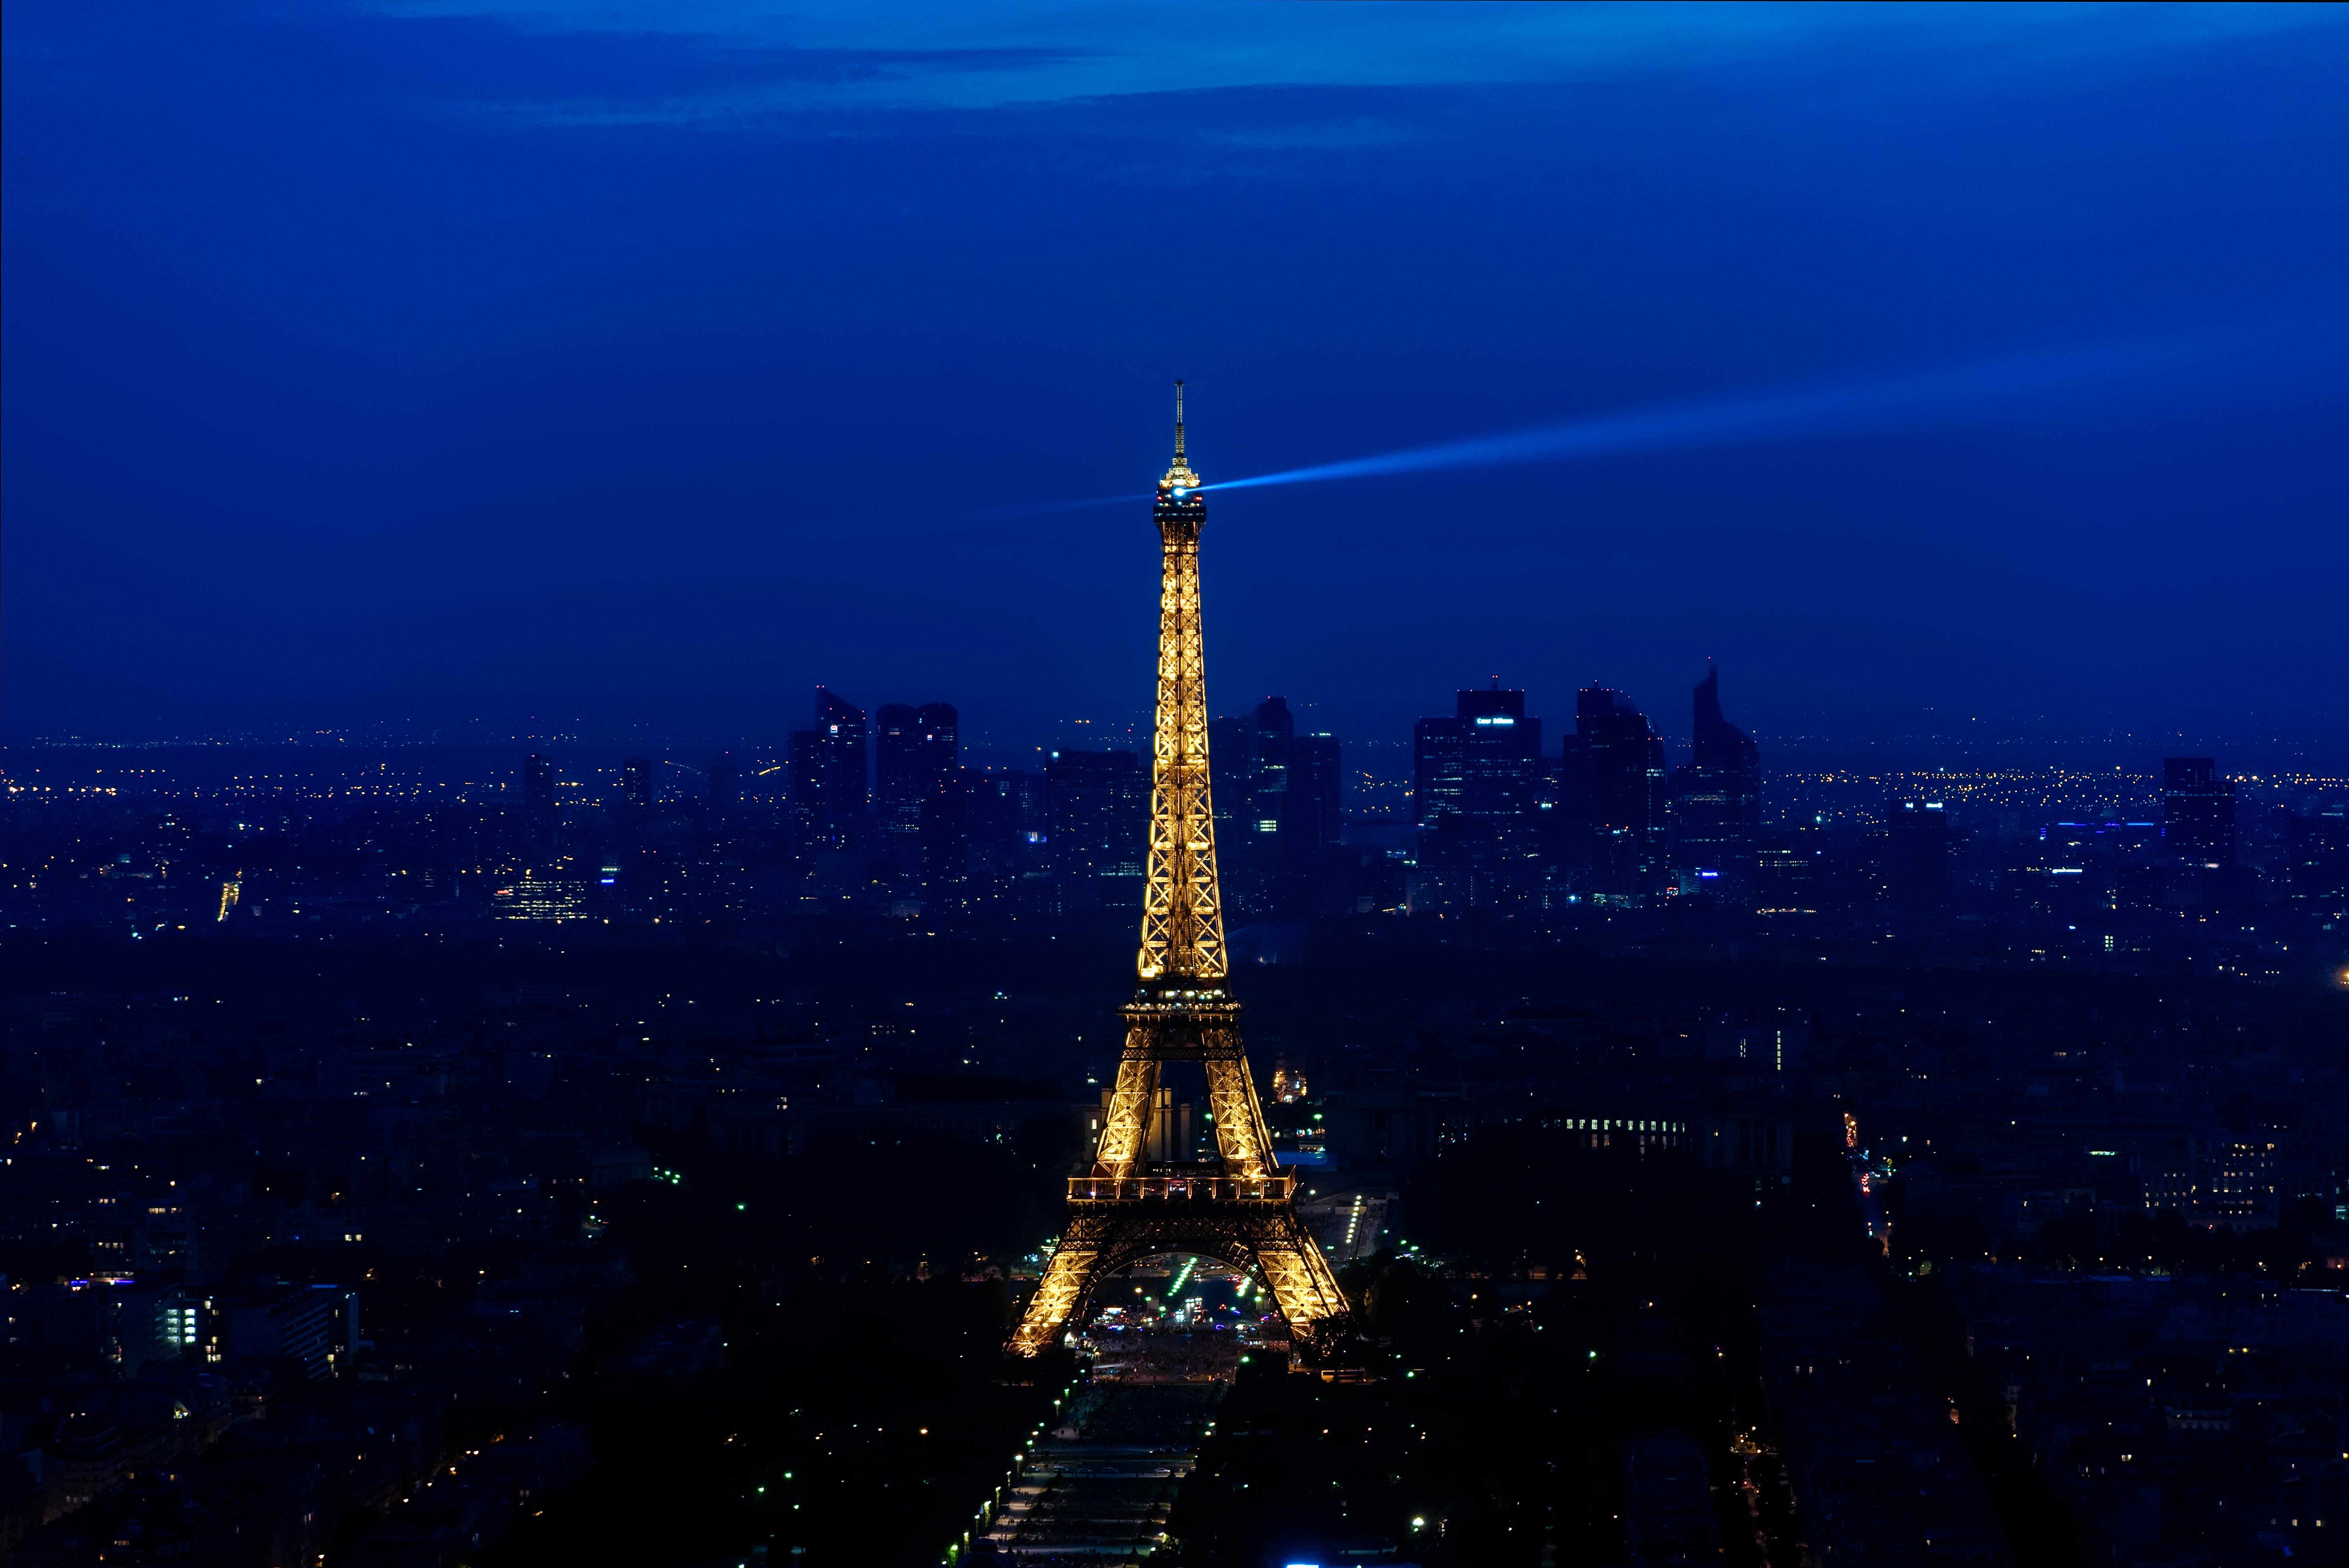 Free photos: Eiffel tower - 52 images, Eiffel tower photos, Eiffel ...